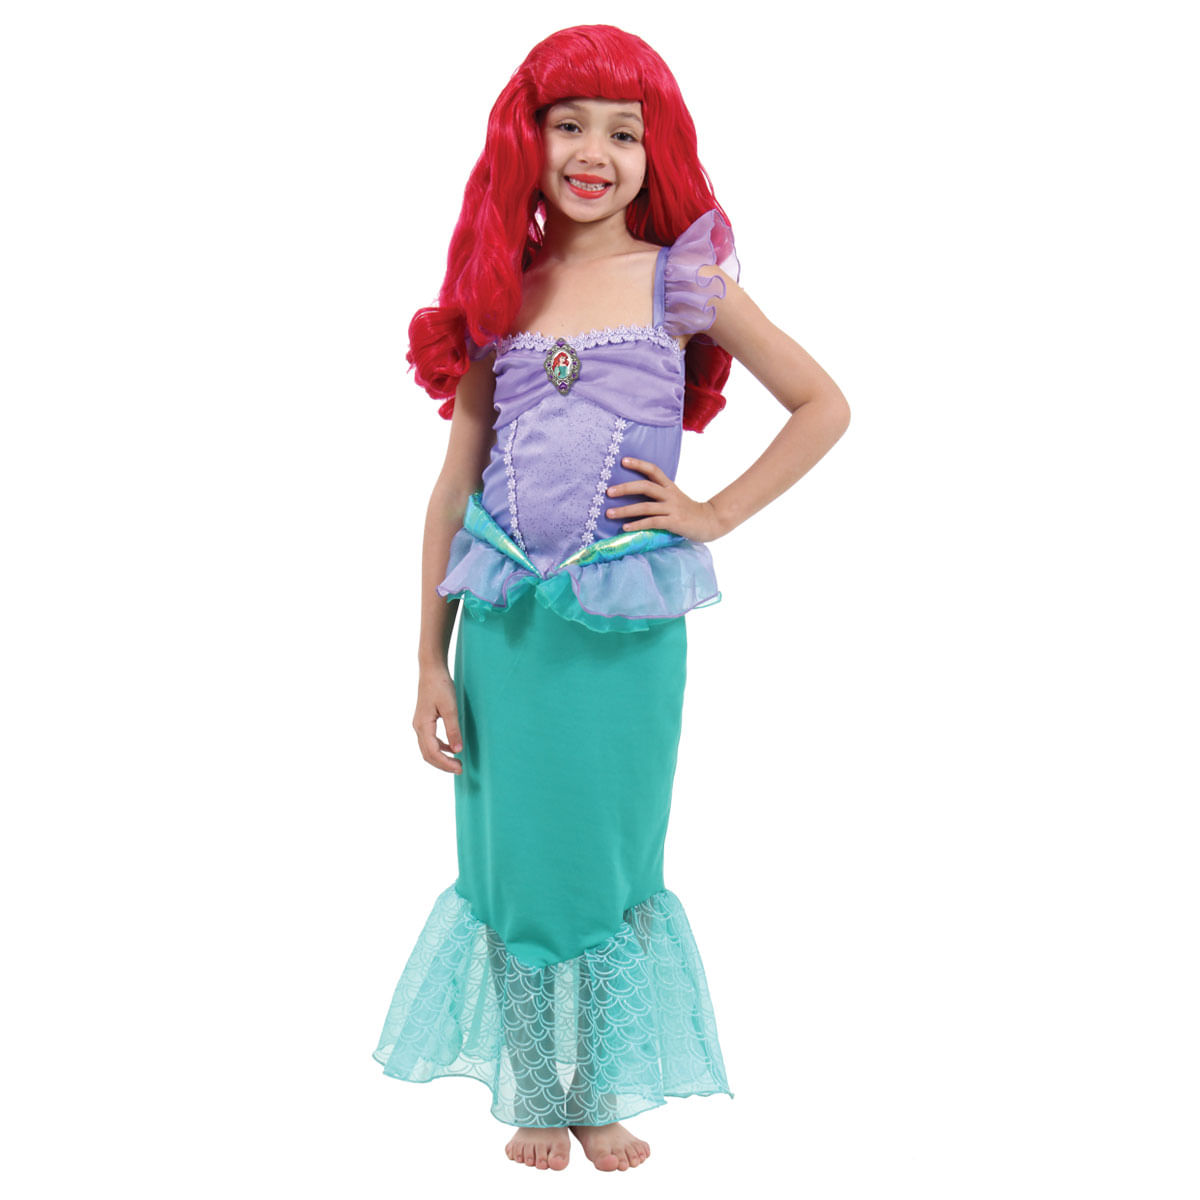 Fantasia da Princesa Ariel Adulto Completa Pequena Sereia em